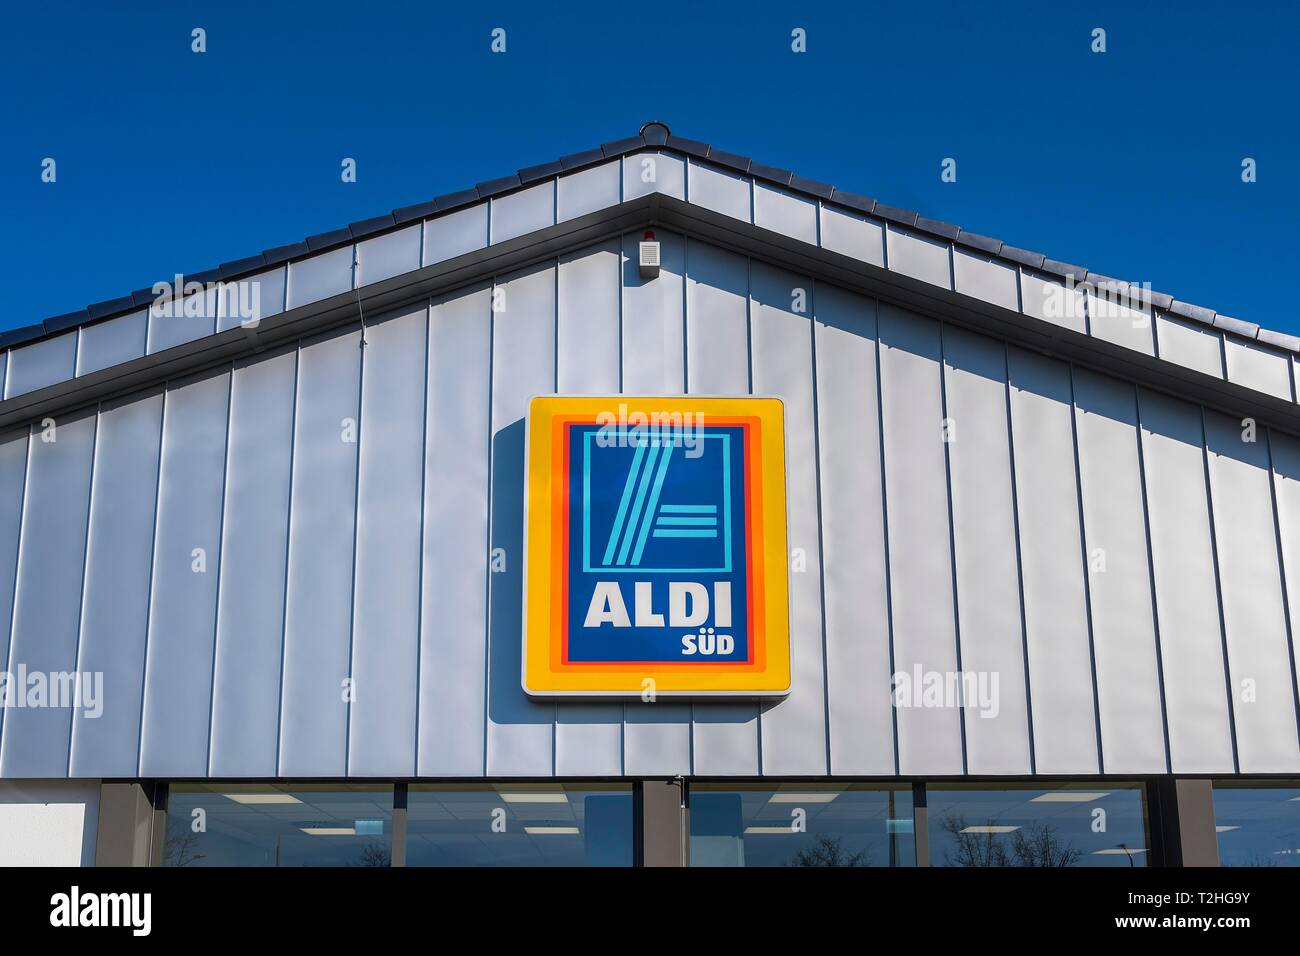 Aldi-Sud logo at the supermarket, Bavaria, Germany Stock Photo